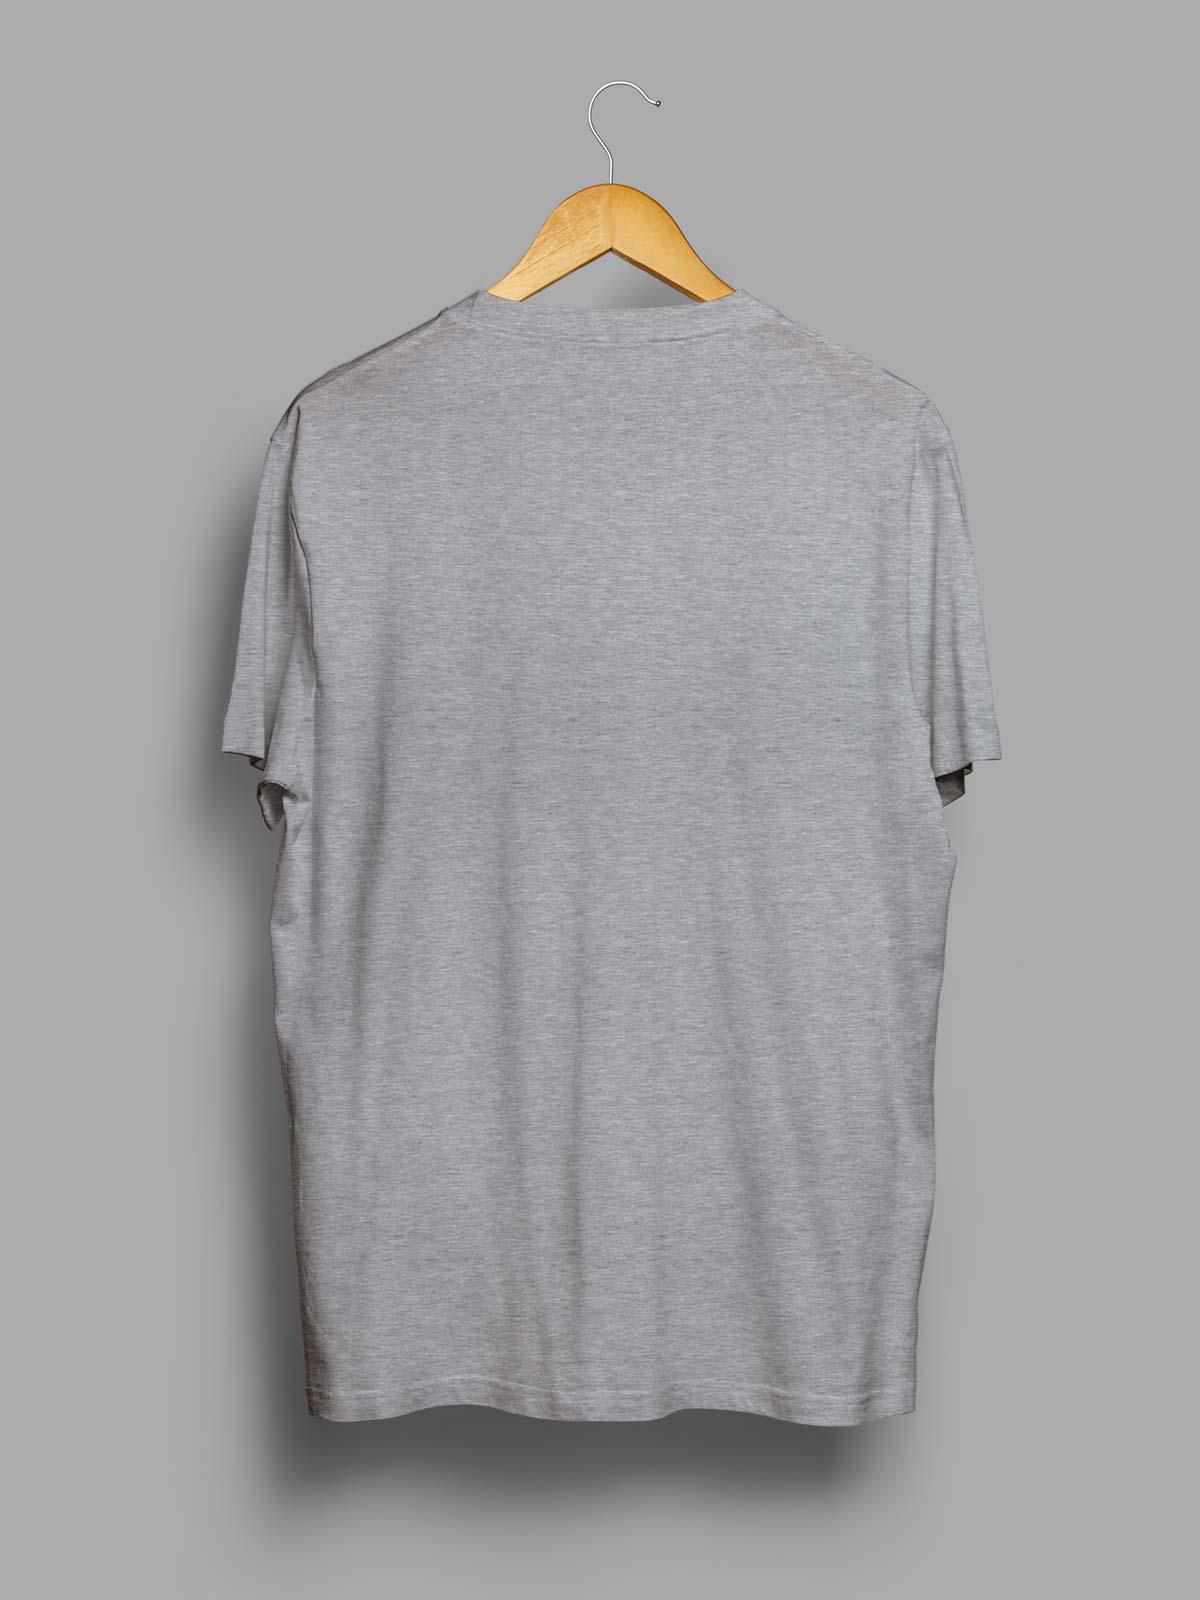 Light Grey Melange Unisex Plain T shirt by shopghumakkad